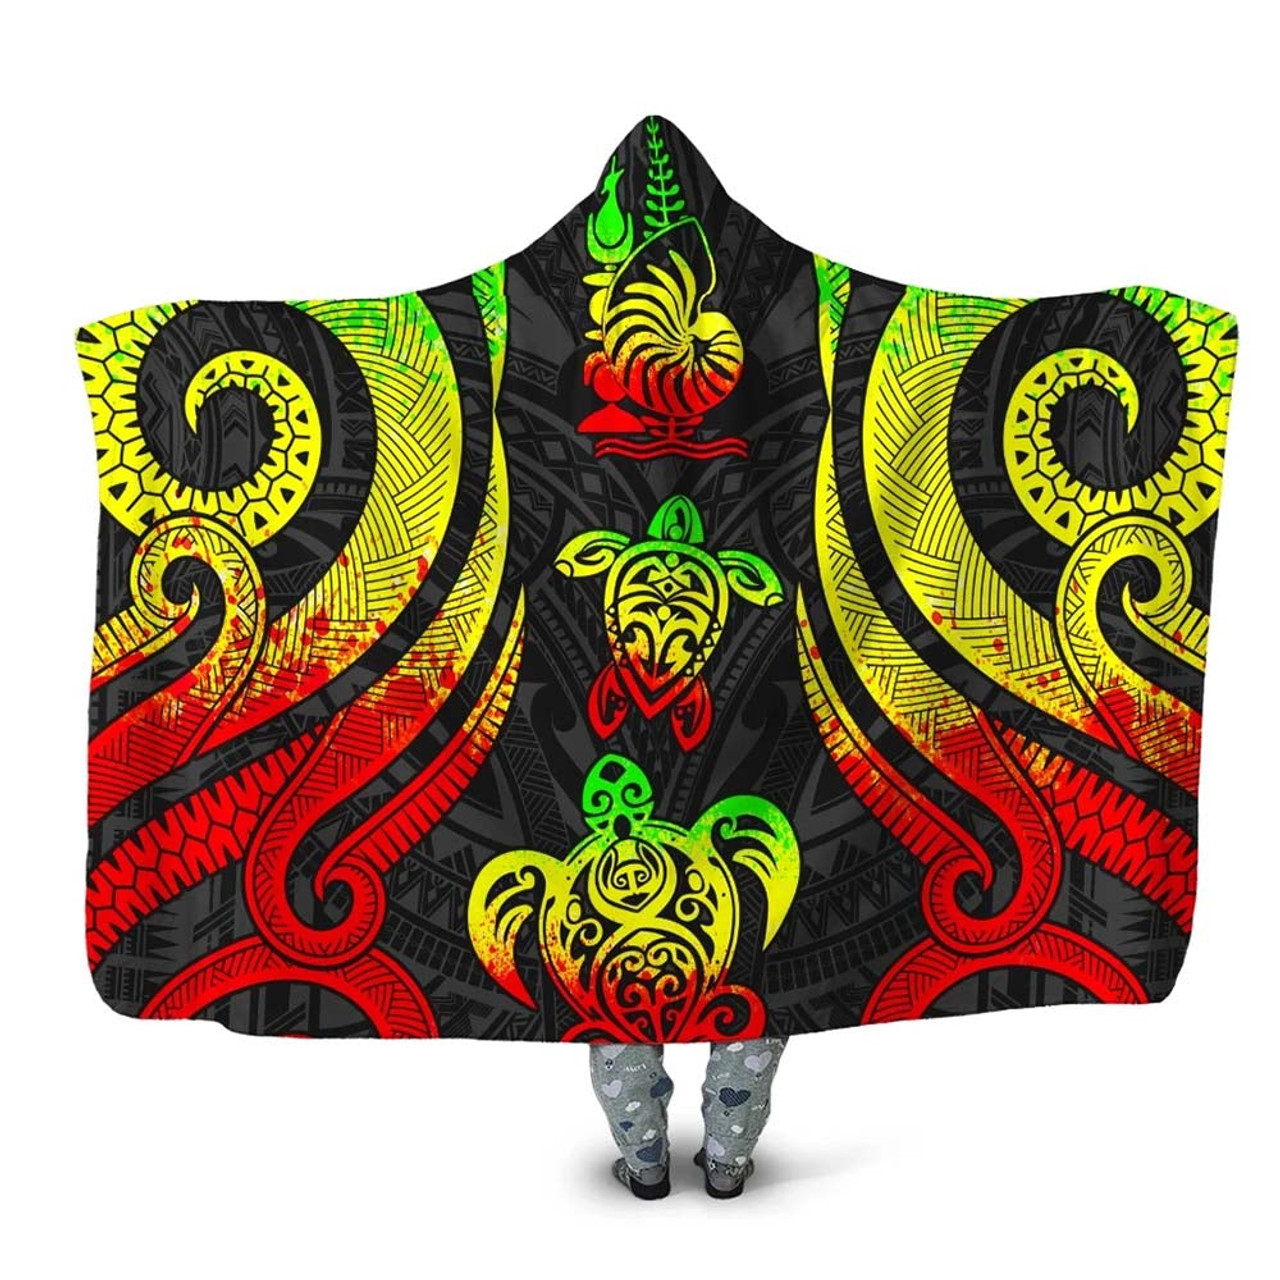 New Caledonia Hooded Blanket - Reggae Tentacle Turtle 1